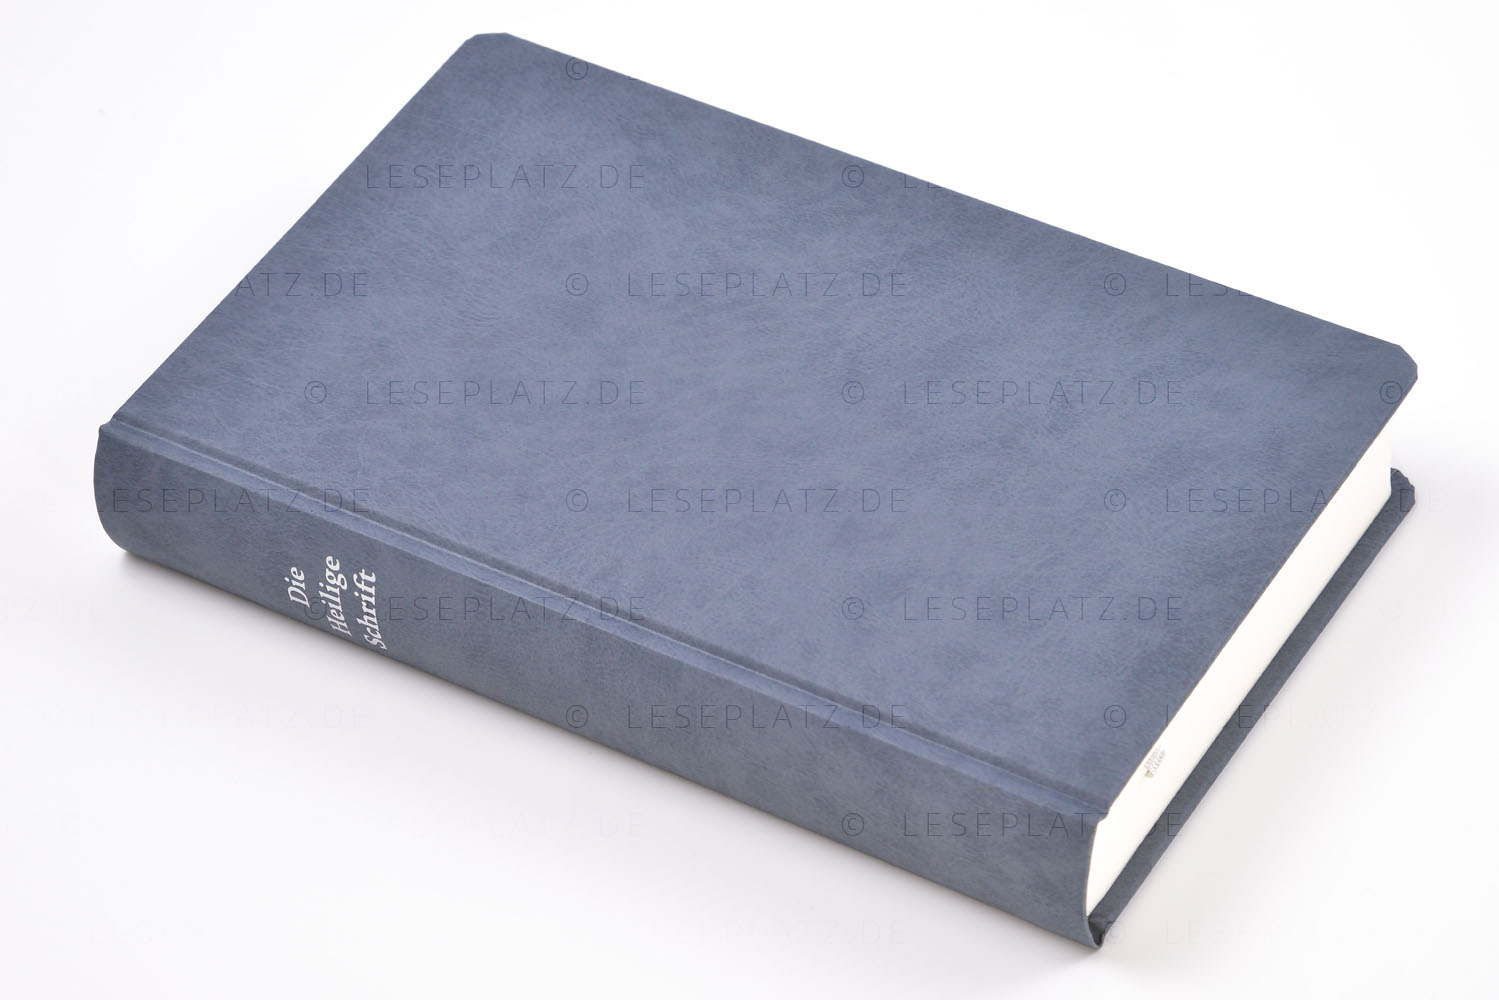 Elberfelder 2003 - Großdruckausgabe / Hardcover grau-blau